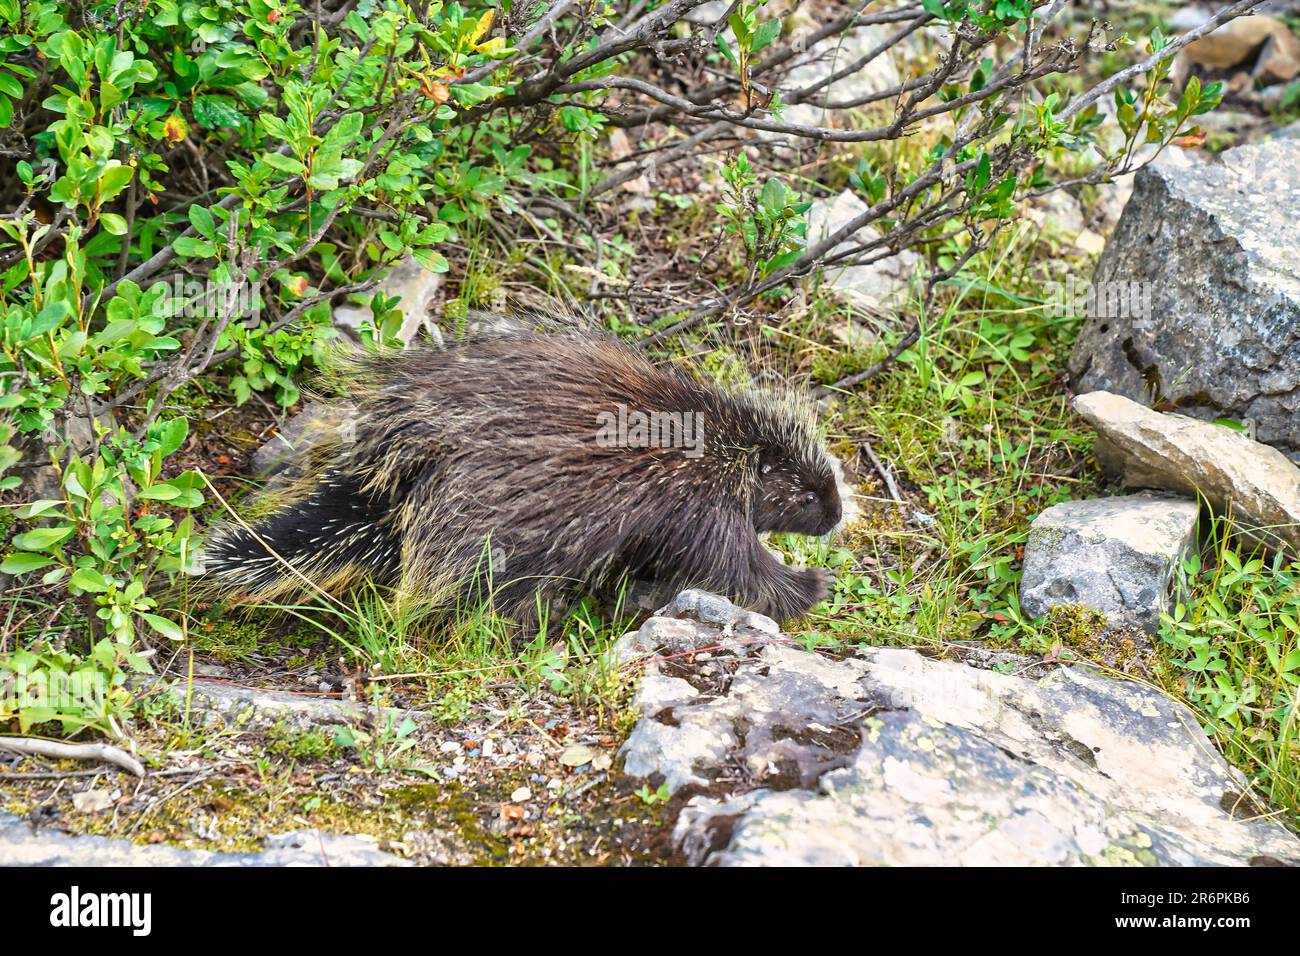 A Canadian Porcupine or Erethizon dorsatum near Lake Moraine in the Canada Rockies Stock Photo